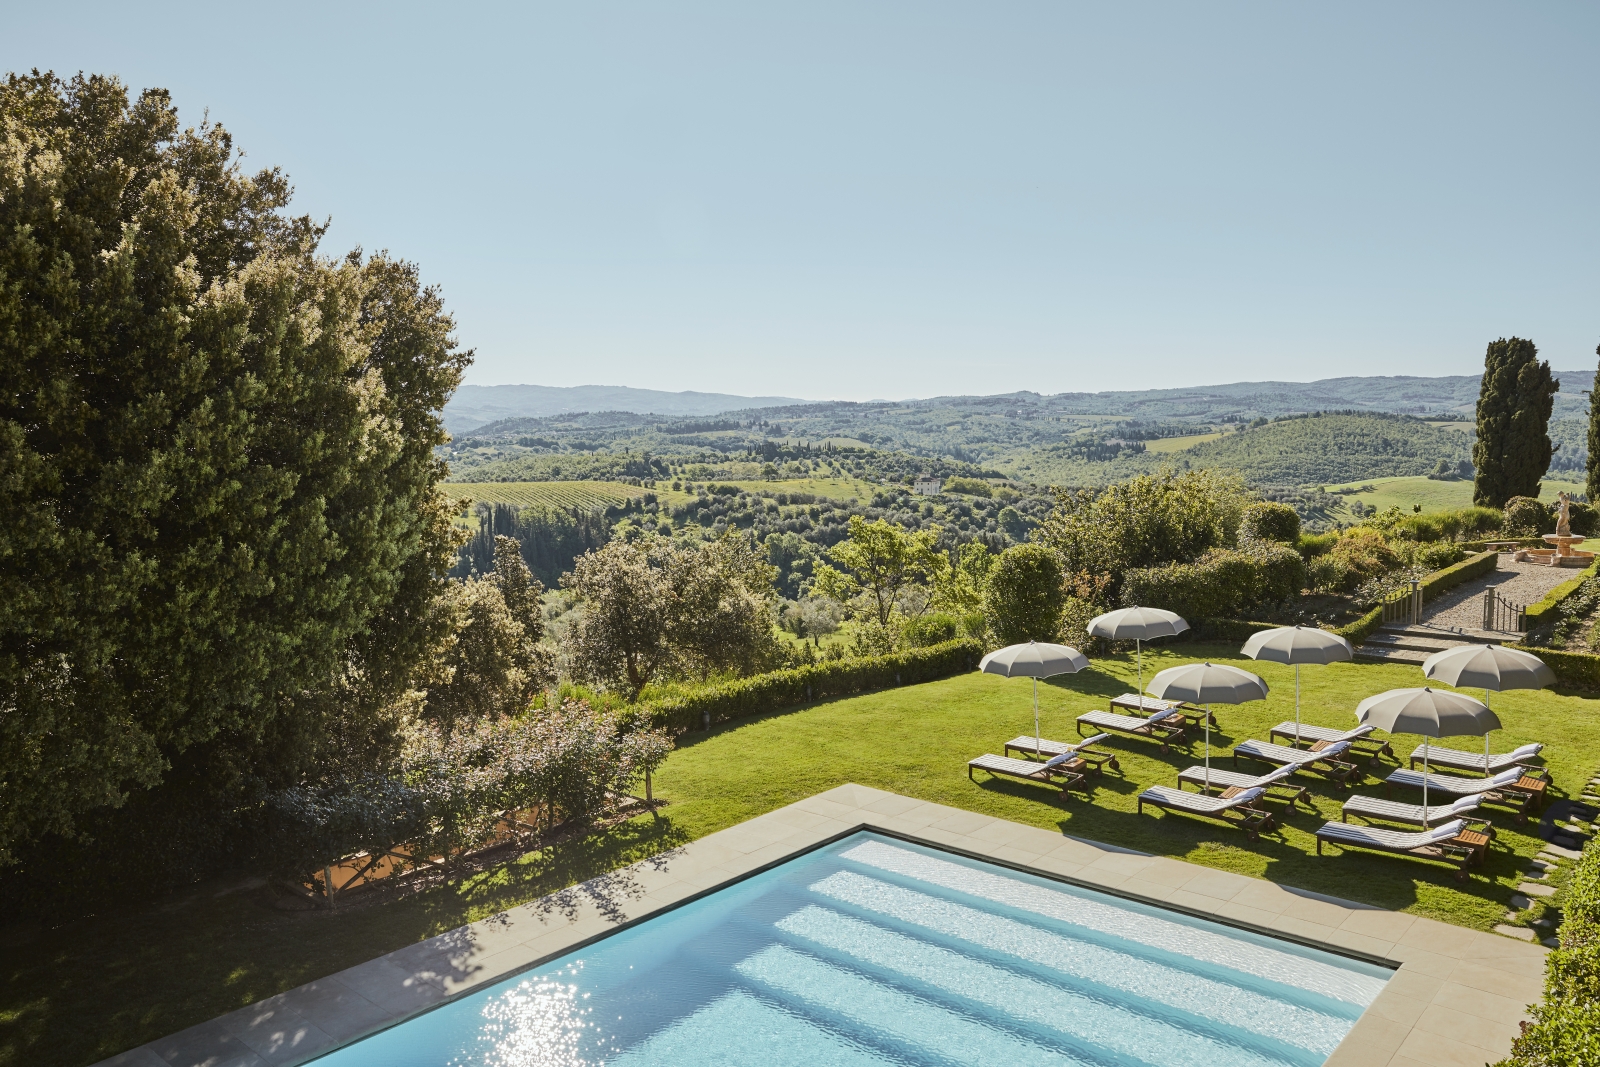 Pool and sun loungers at luxury resort COMO Castello del Nero in Italy